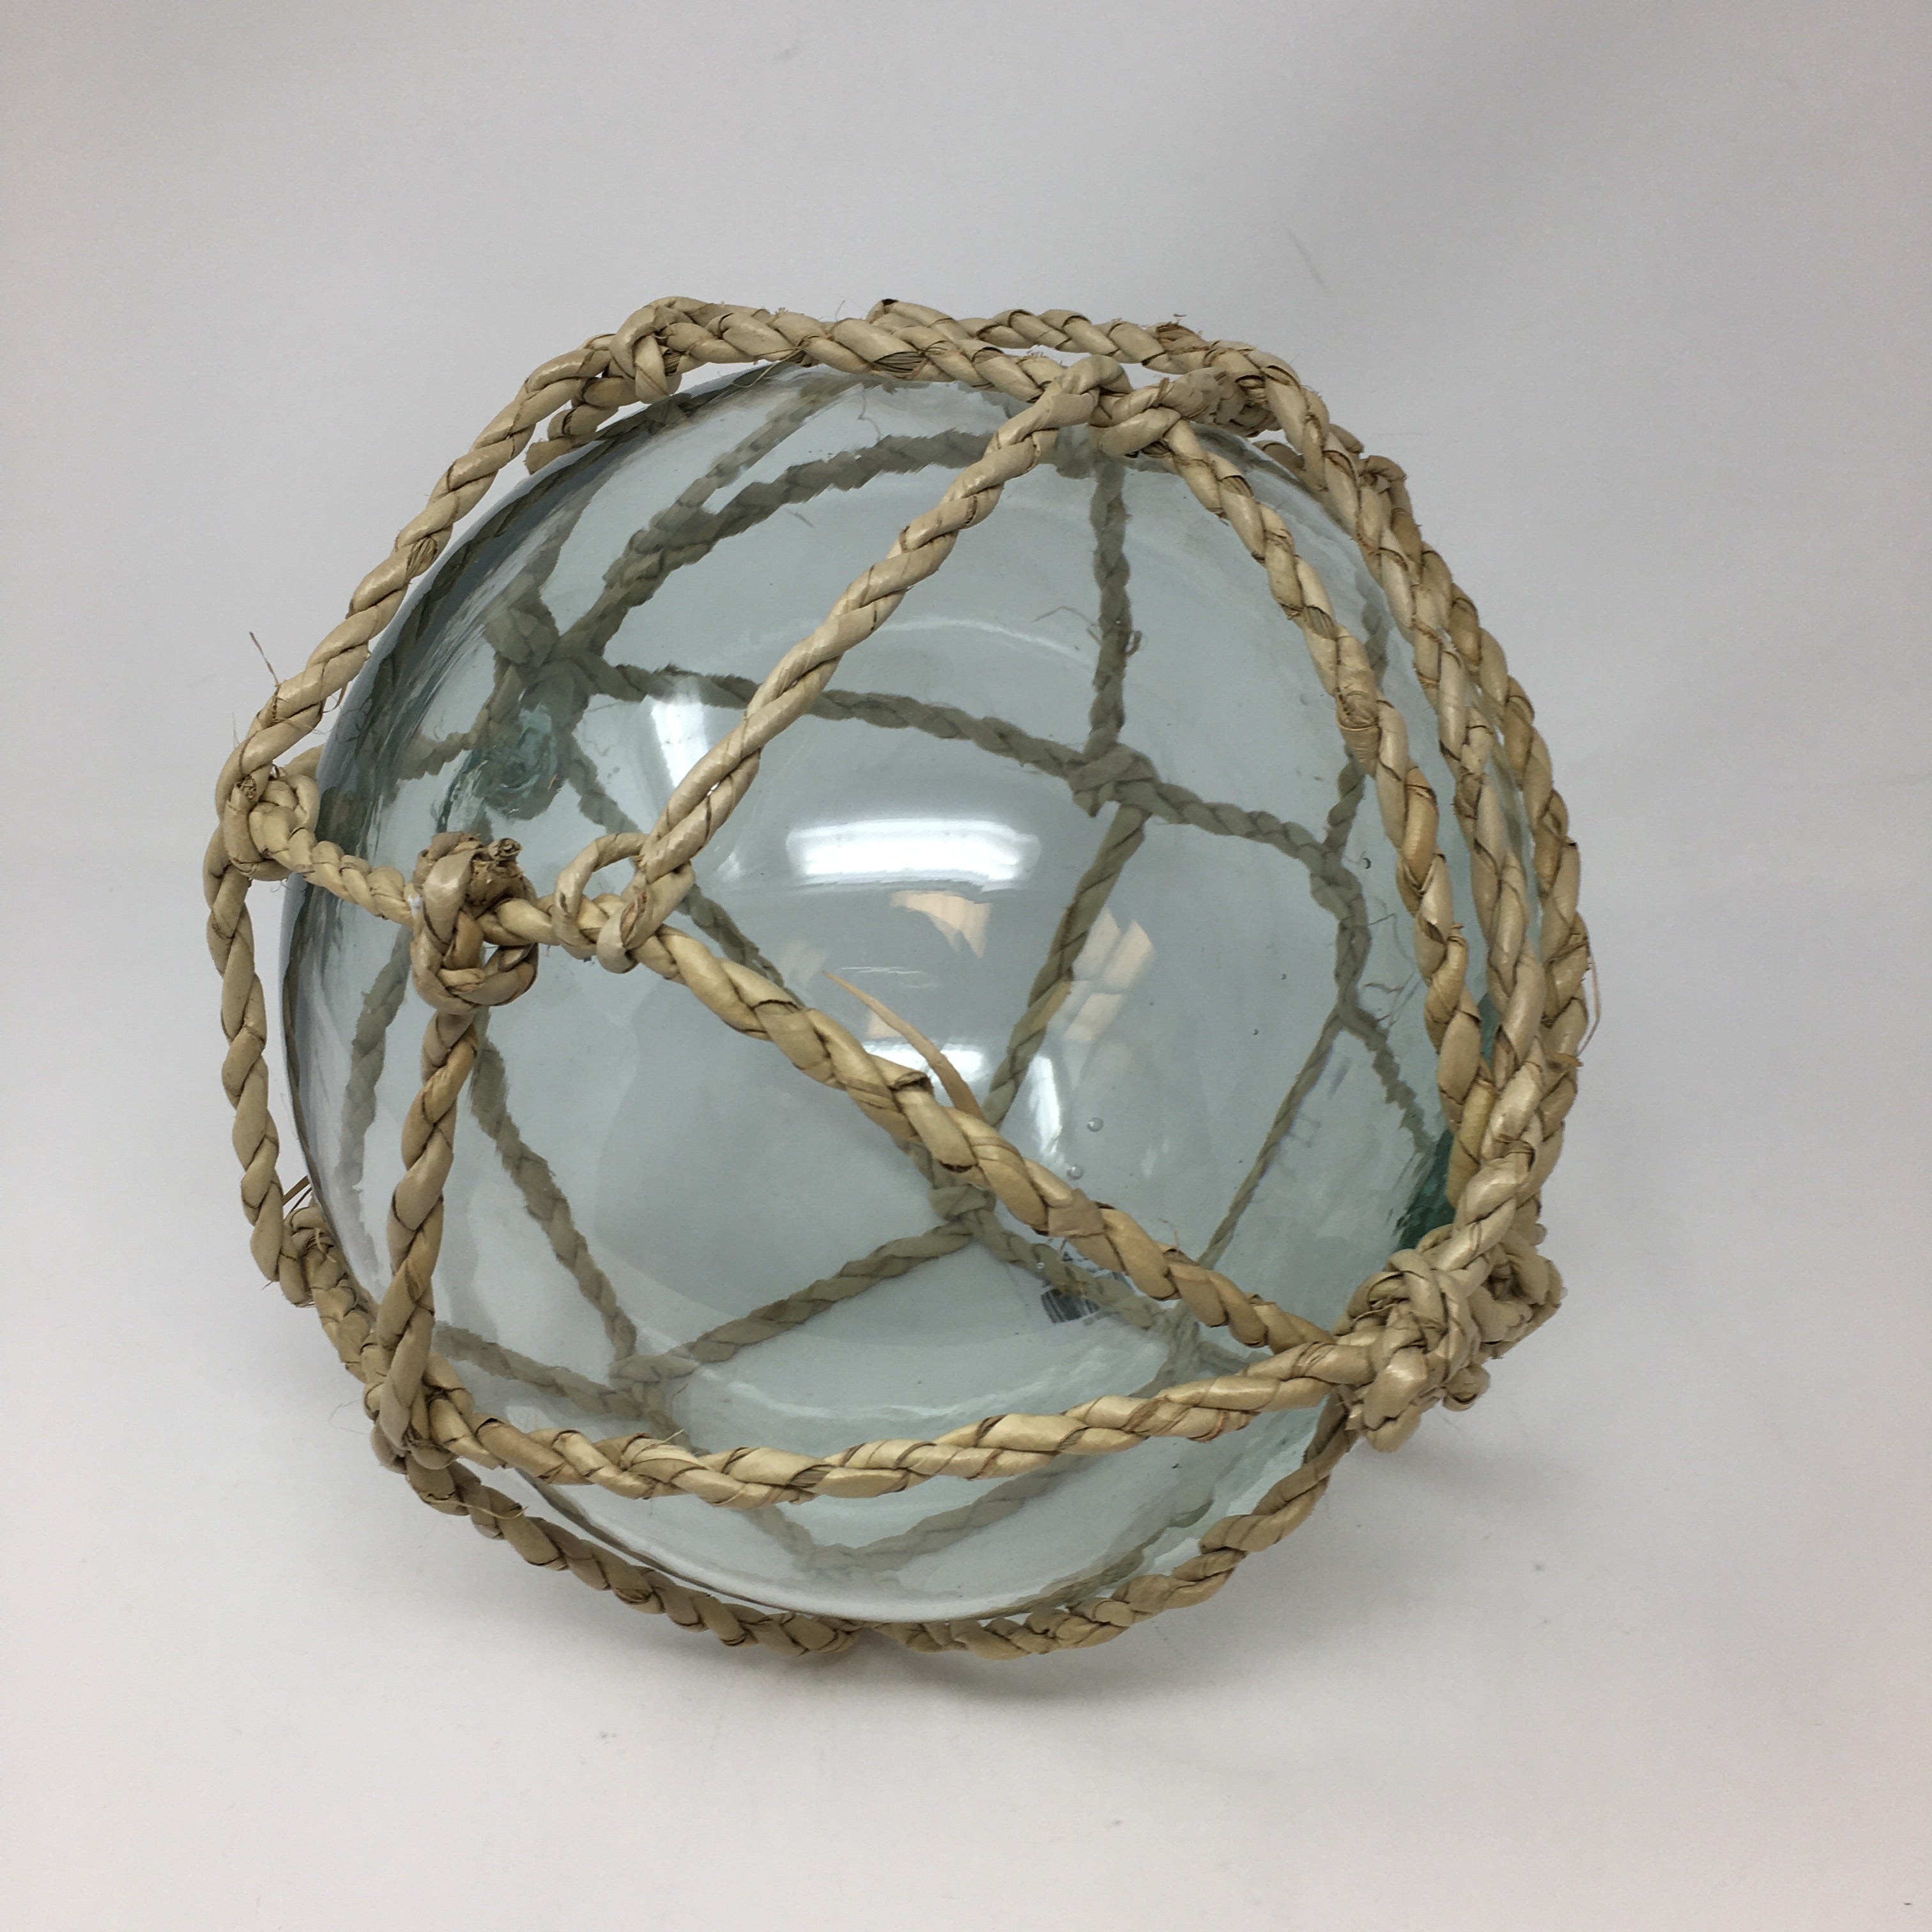 Glass Ball w/ Buri Rope Weave - My Secret Garden